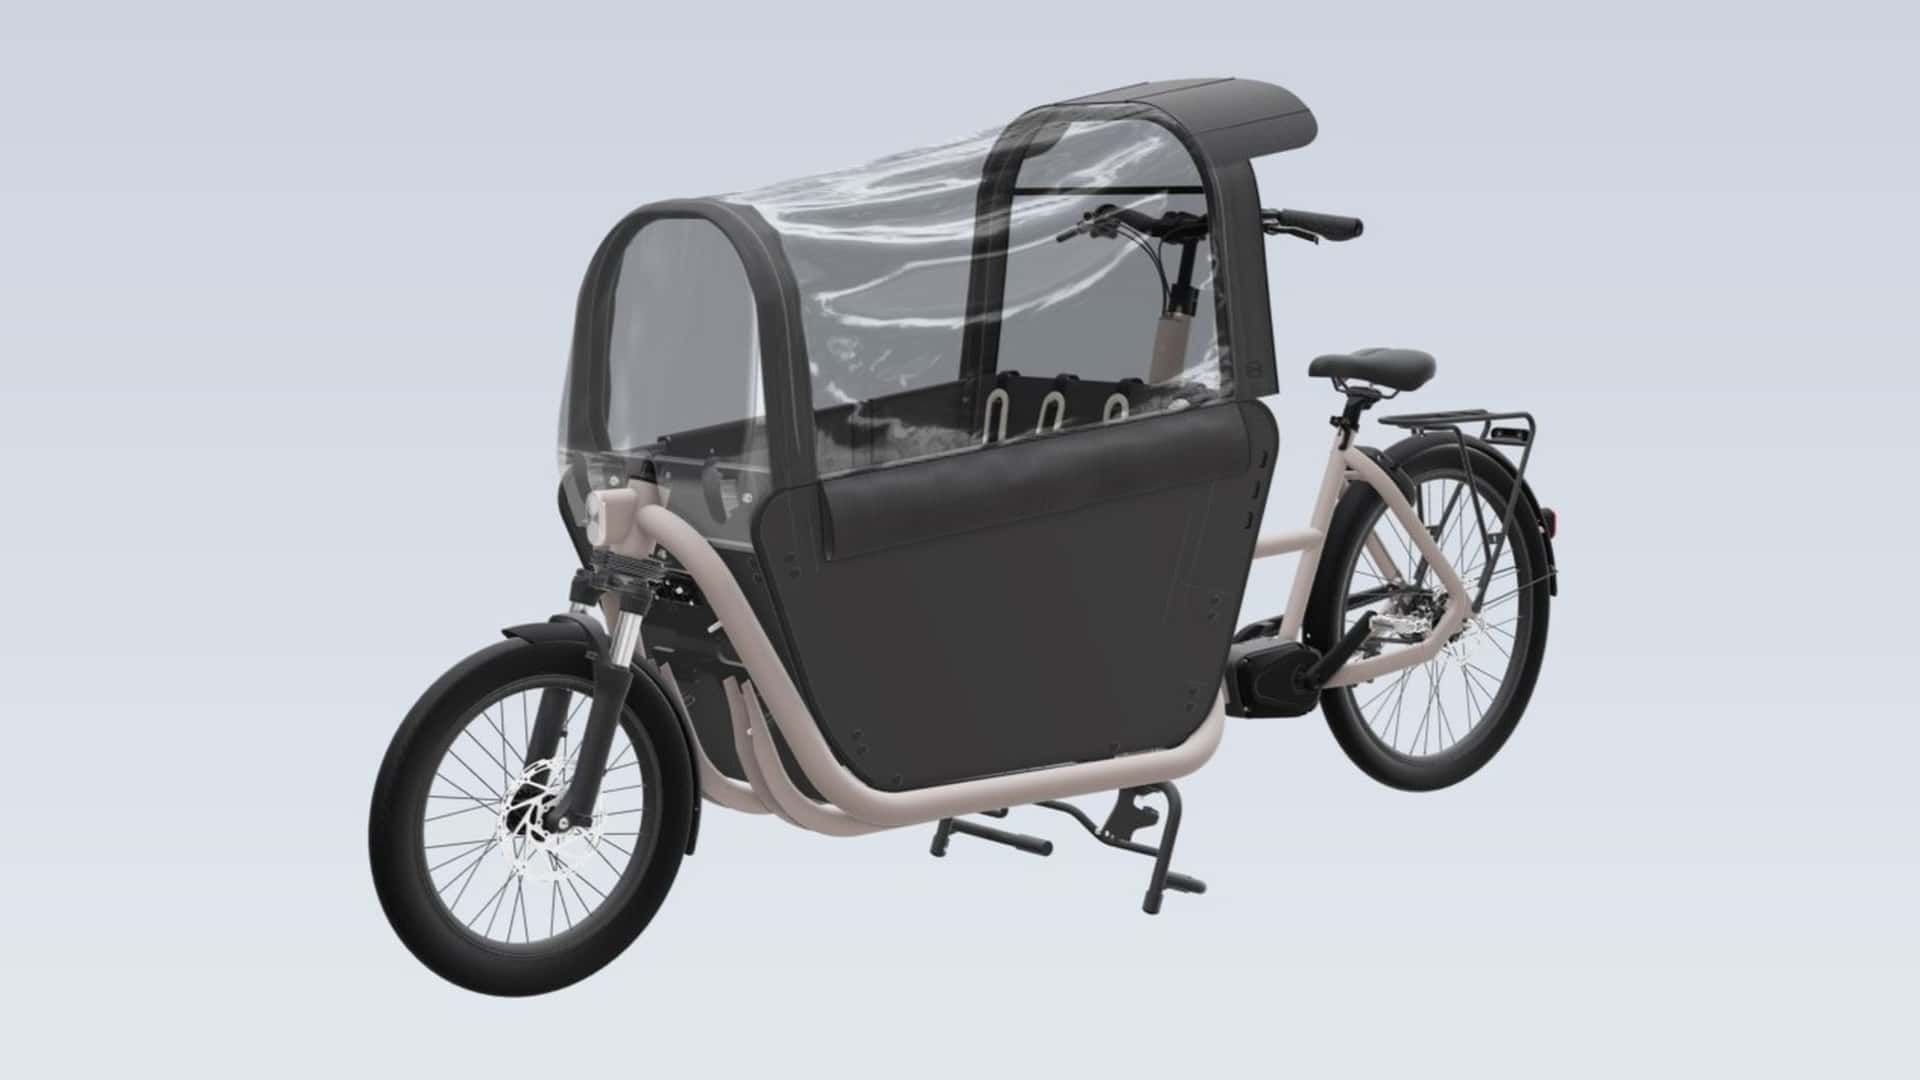 decathlon expected to launch new f900e velo cargo e-bike soon